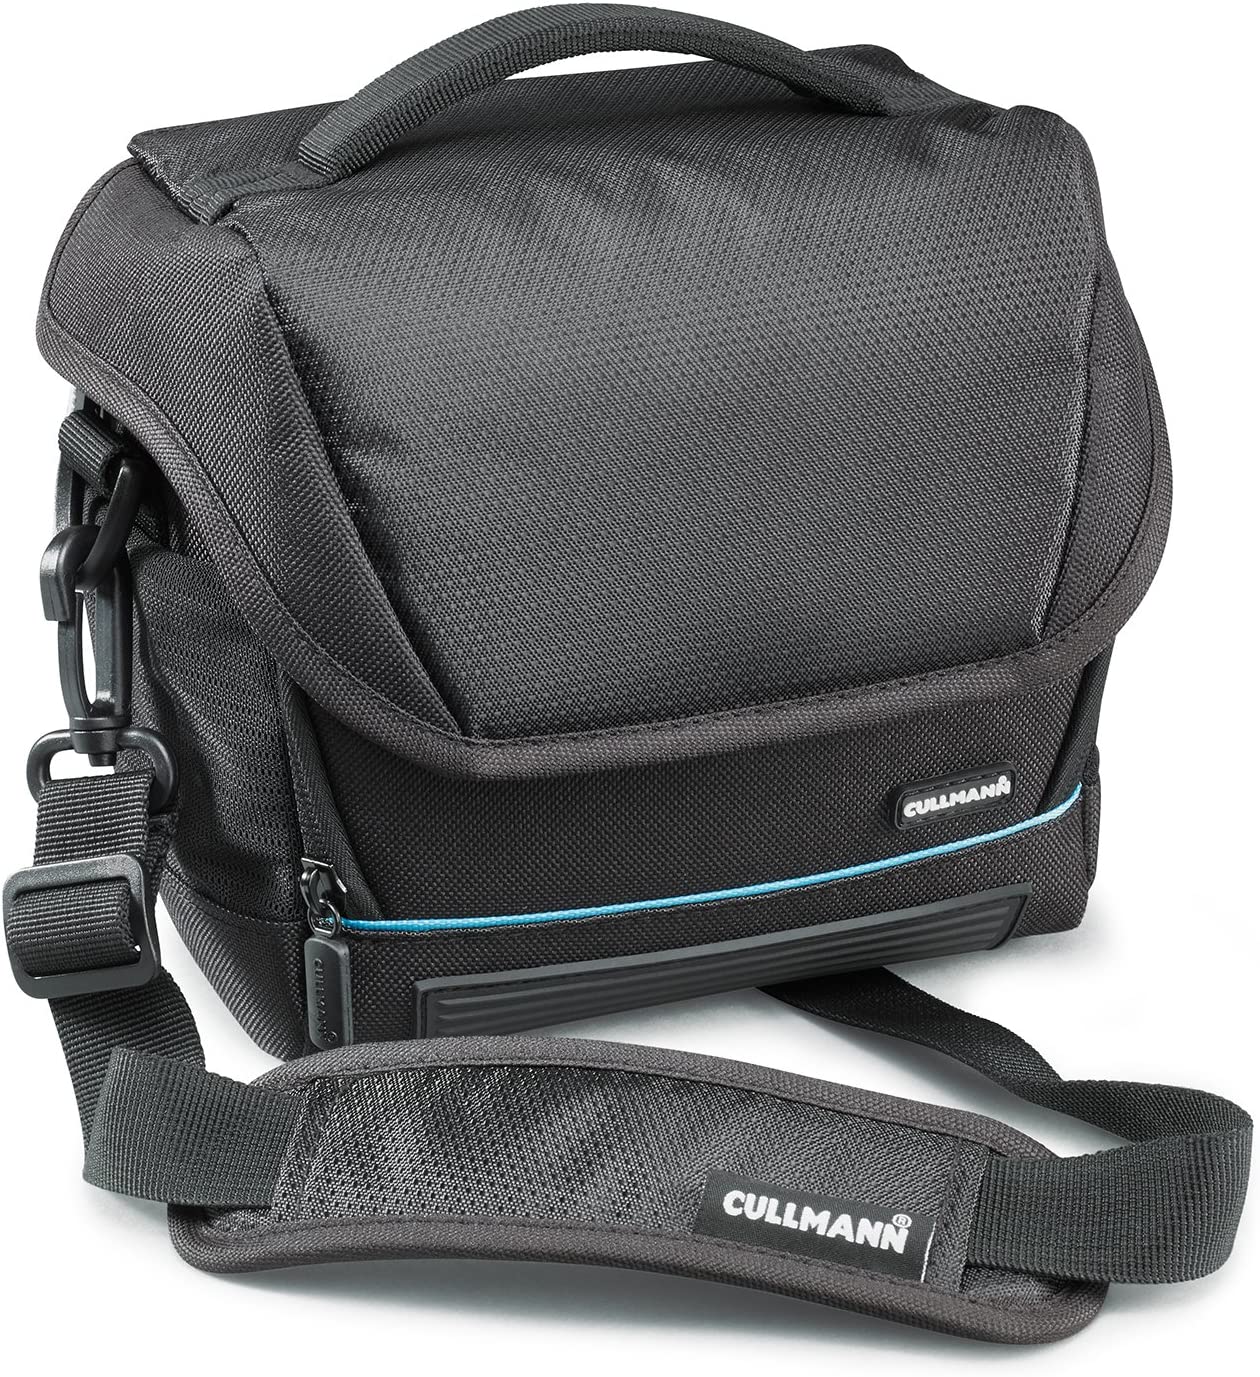 Product Image of Cullmann Boston Vario 330 Camera Bag